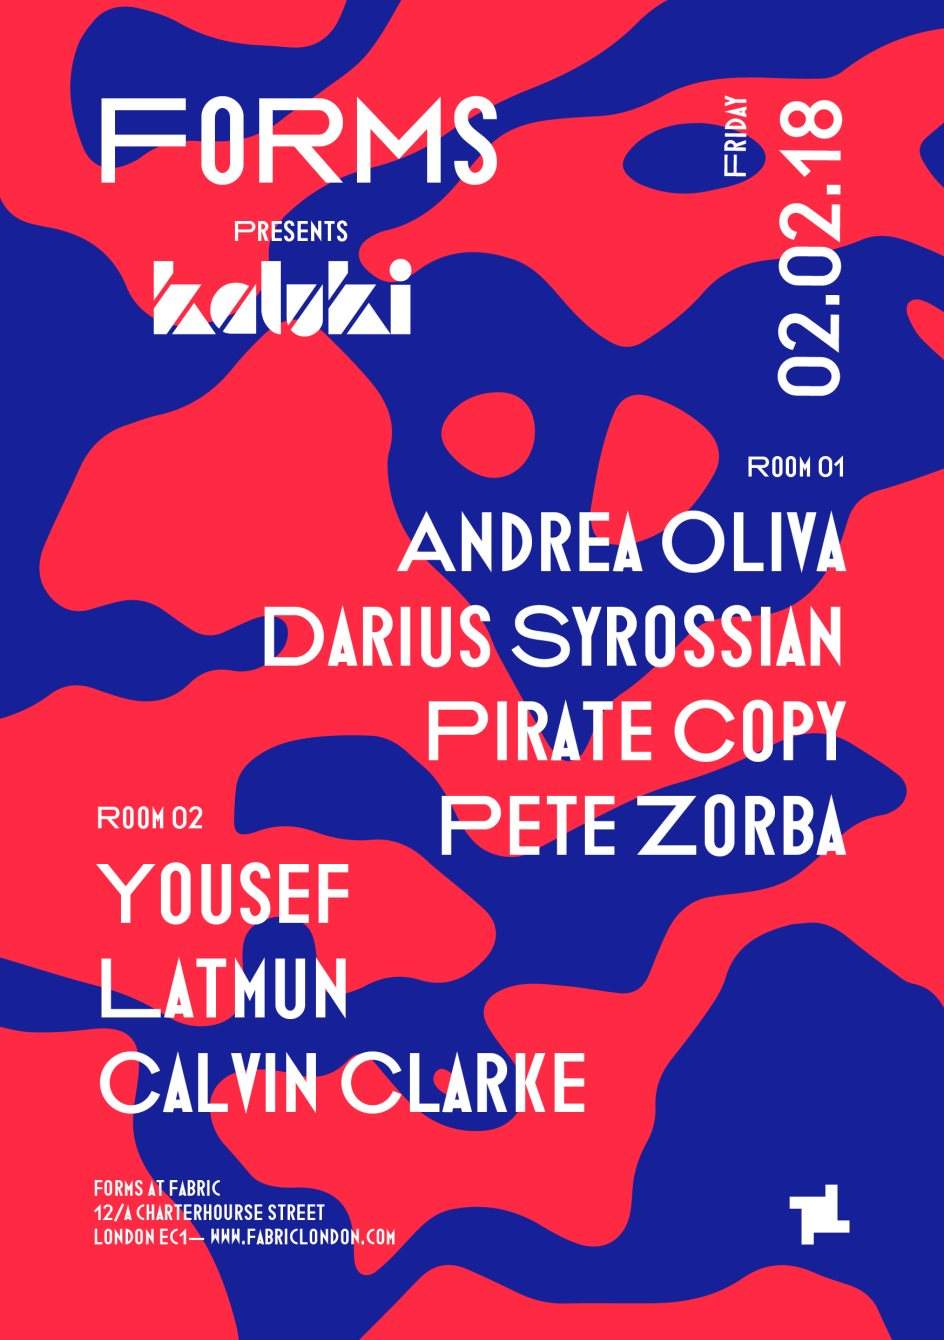 Forms presents Kaluki with Andrea Oliva, Darius Syrossian, Yousef, Latmun & More - Página trasera